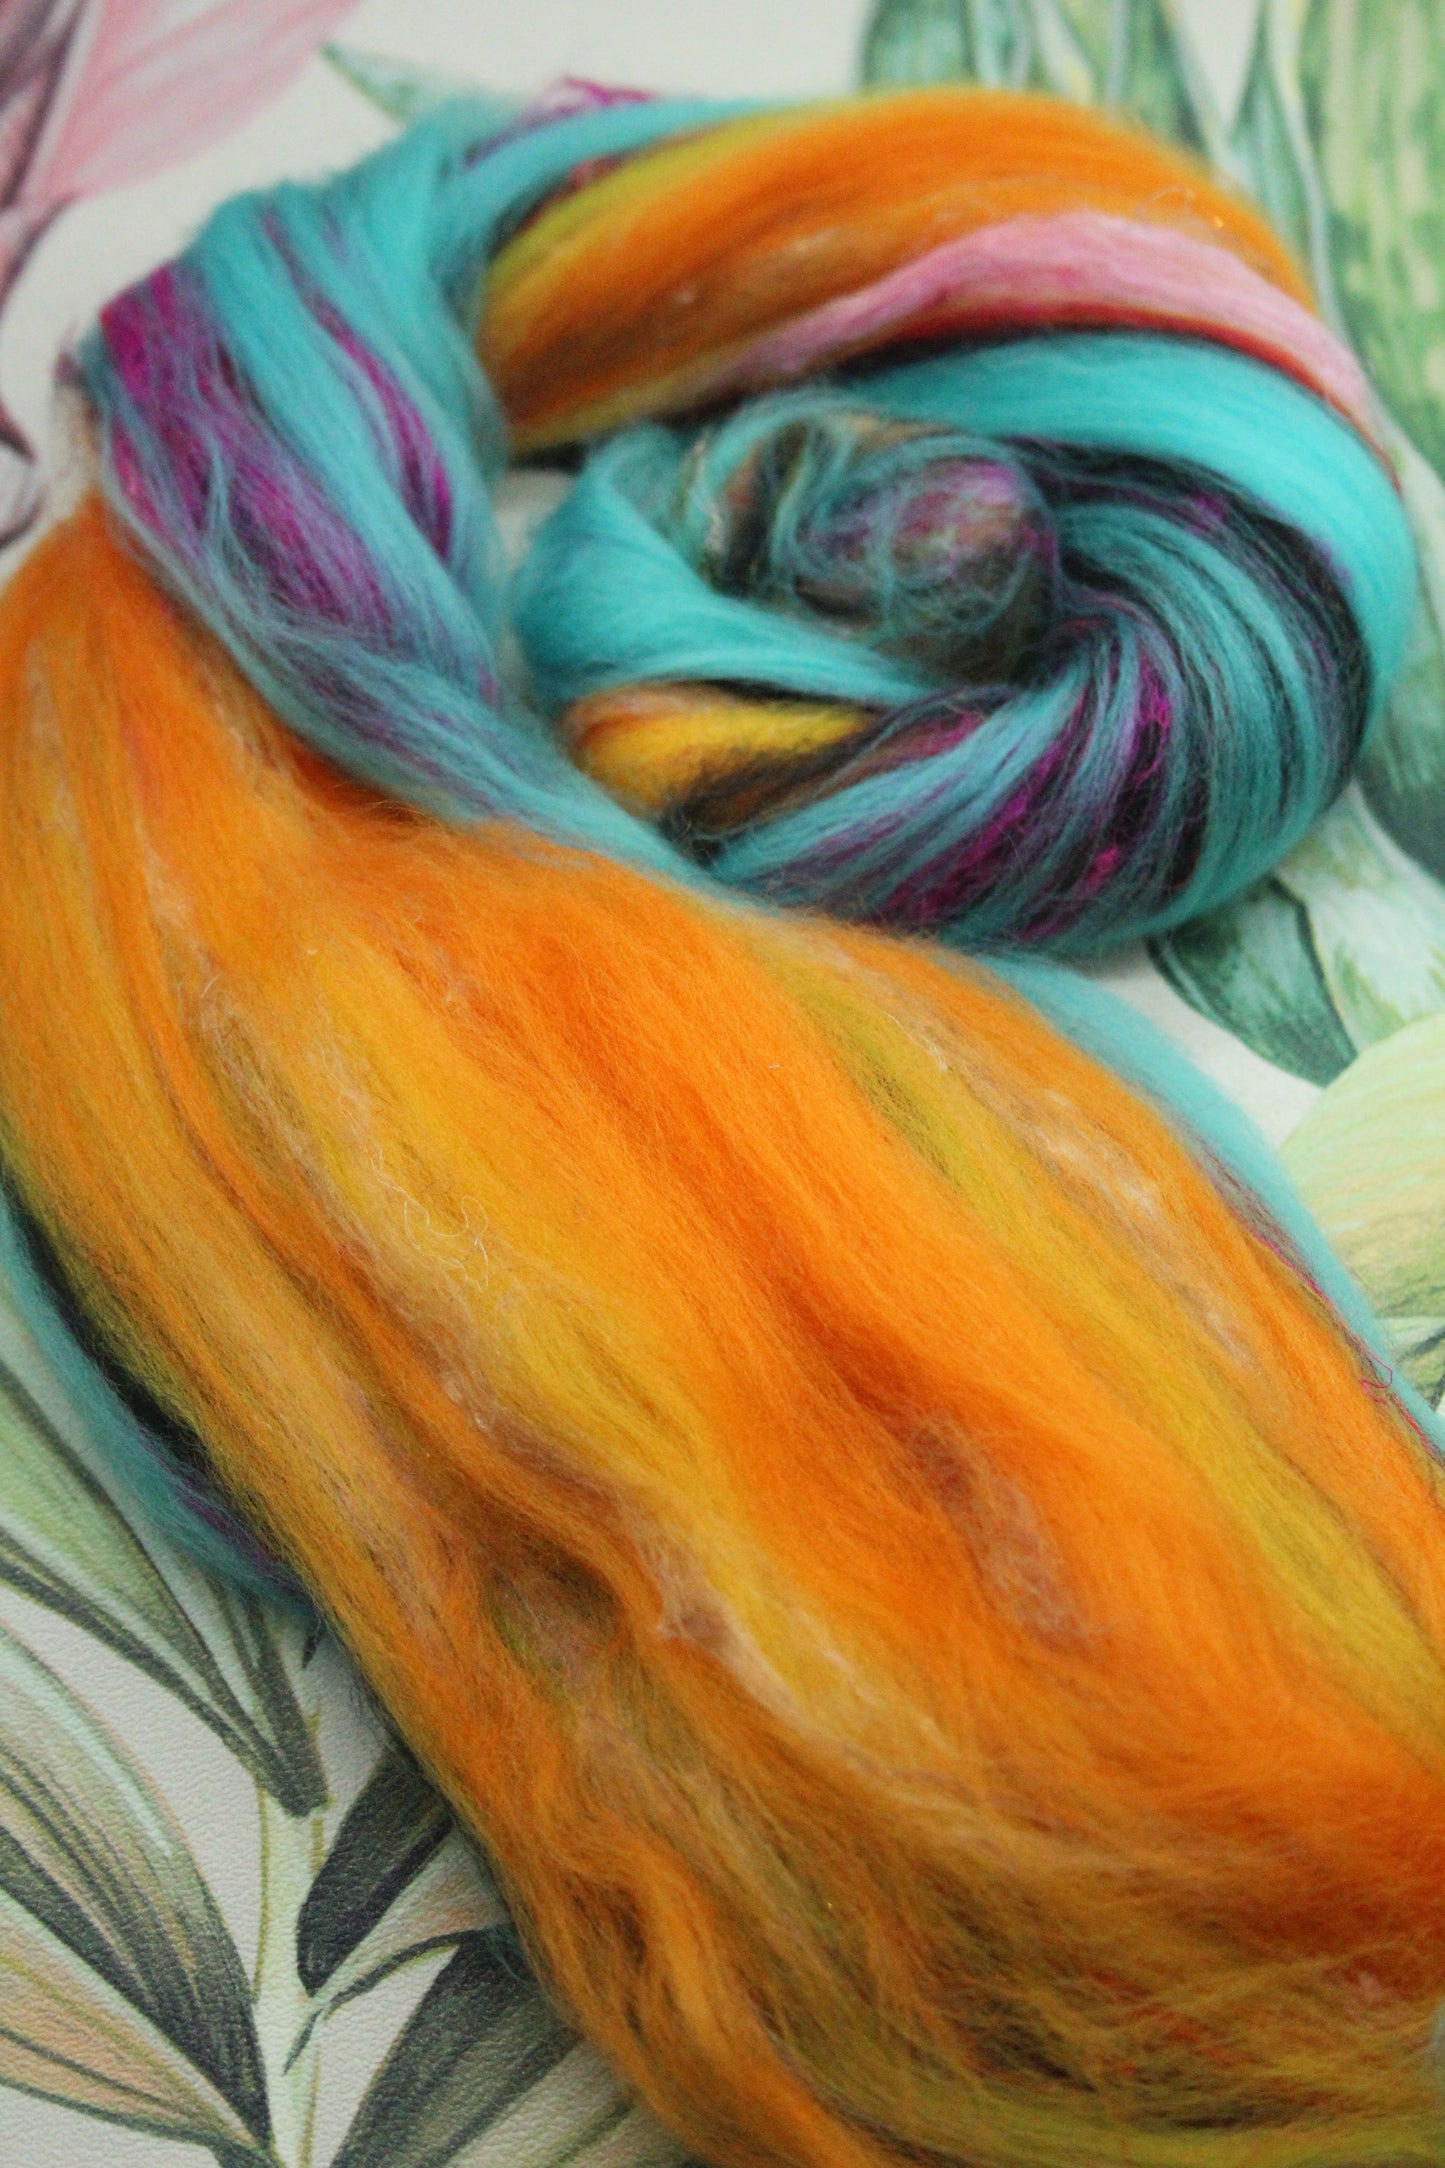 Wool Blend - Orange Blue Black - 24 grams / 0.8 oz  - Fibre for felting, weaving or spinning